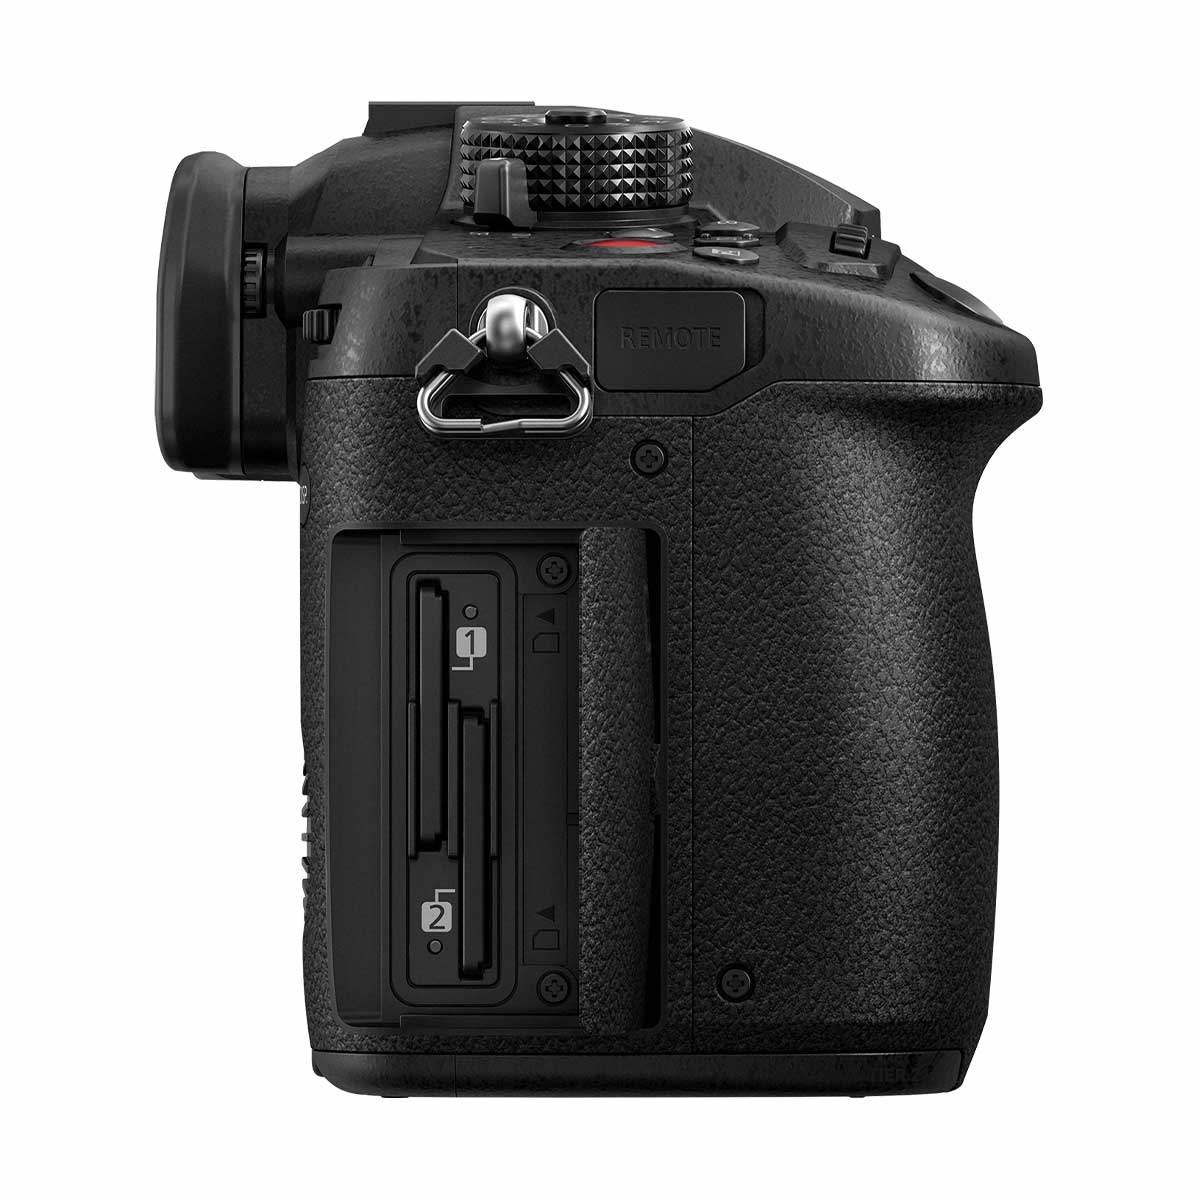 Panasonic Lumix DMC-GH5M2 Digital Camera Body